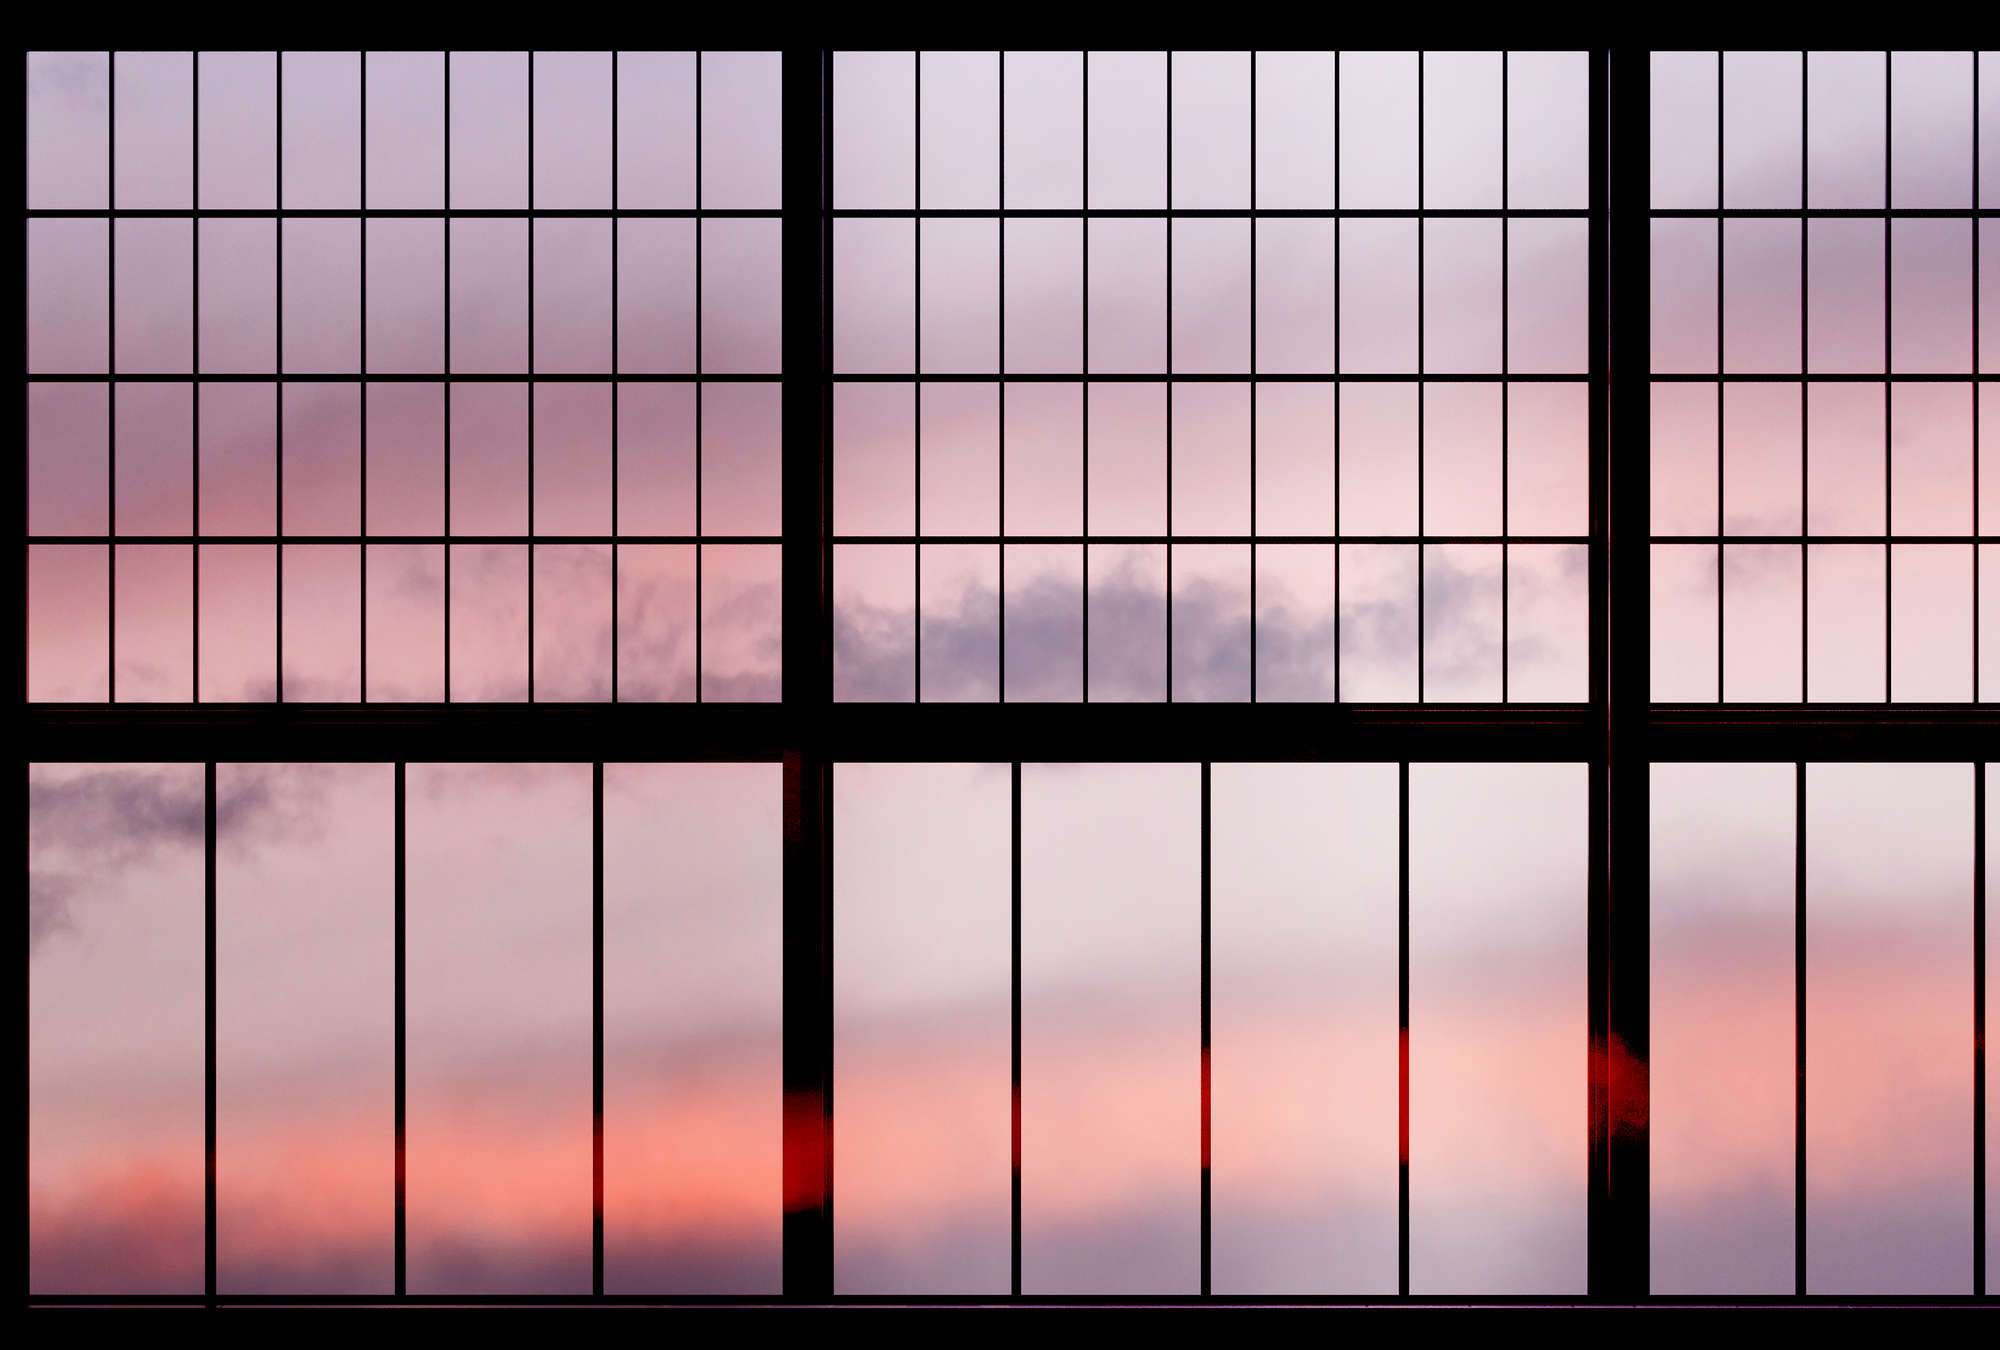             Sky 1 - Window Wallpaper Sunrise View - Pink, Black | Matt Smooth Non-woven
        